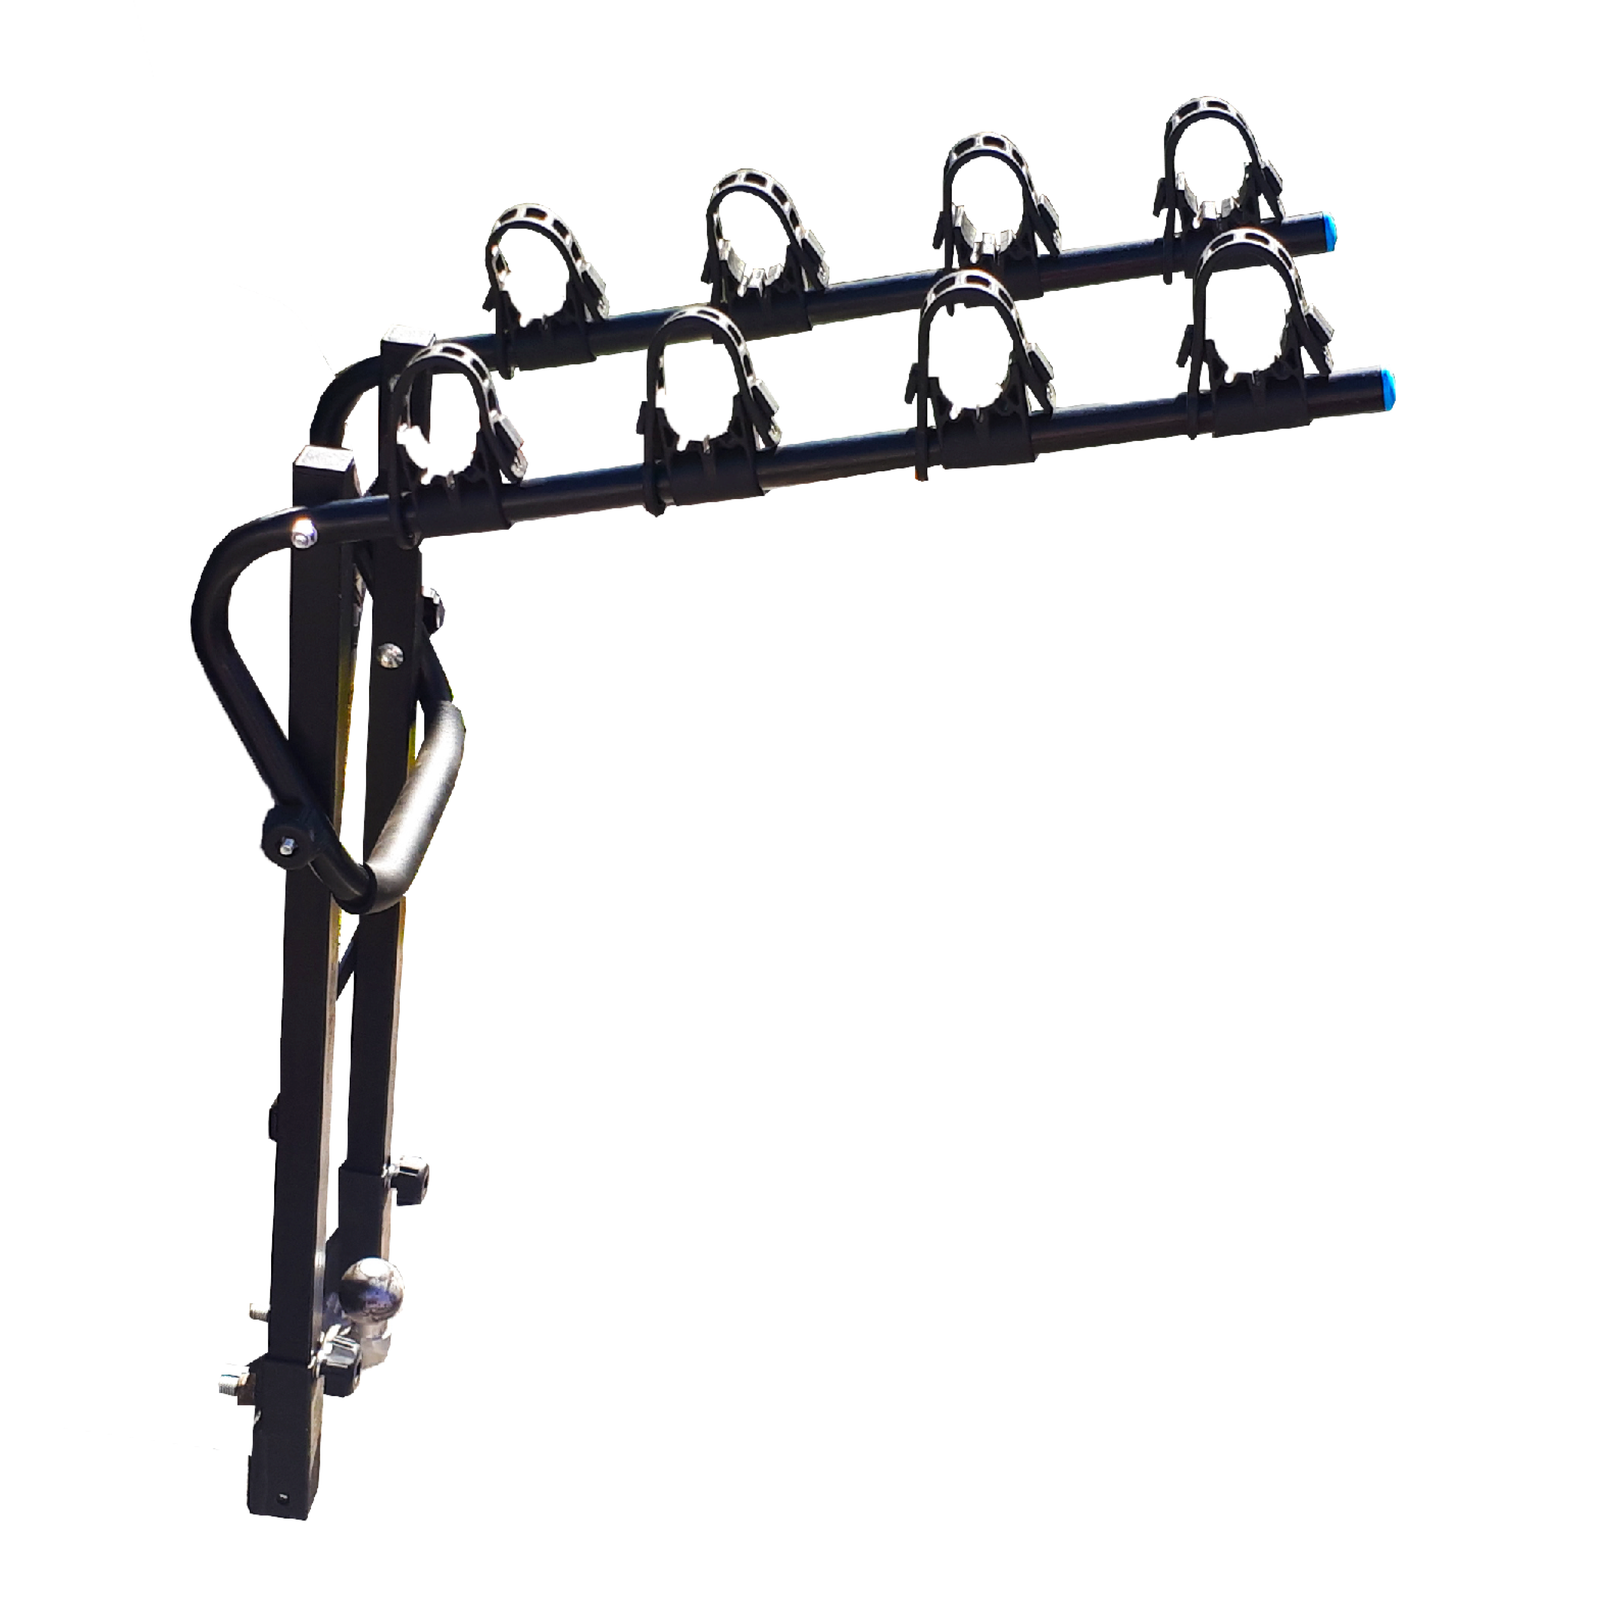 holdfast bicycle rack